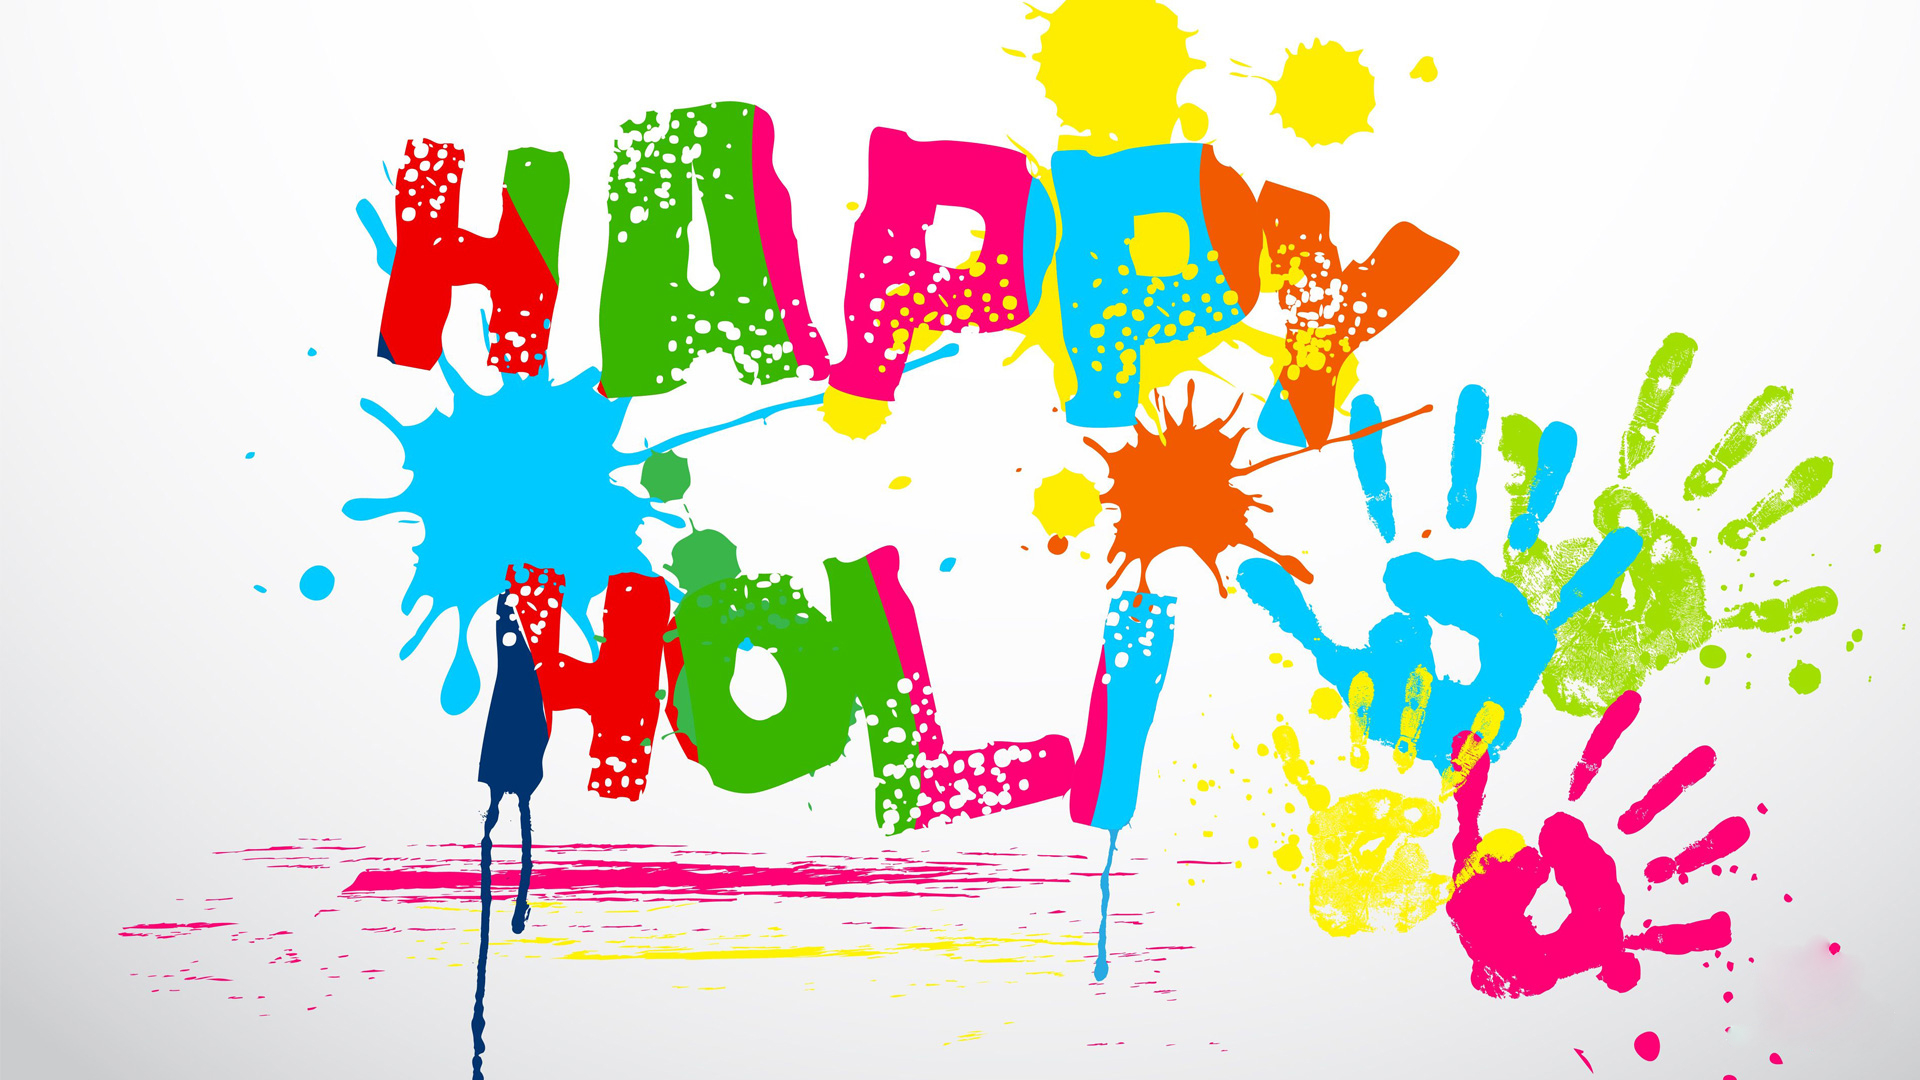 Holiday Holi HD Wallpaper | Background Image